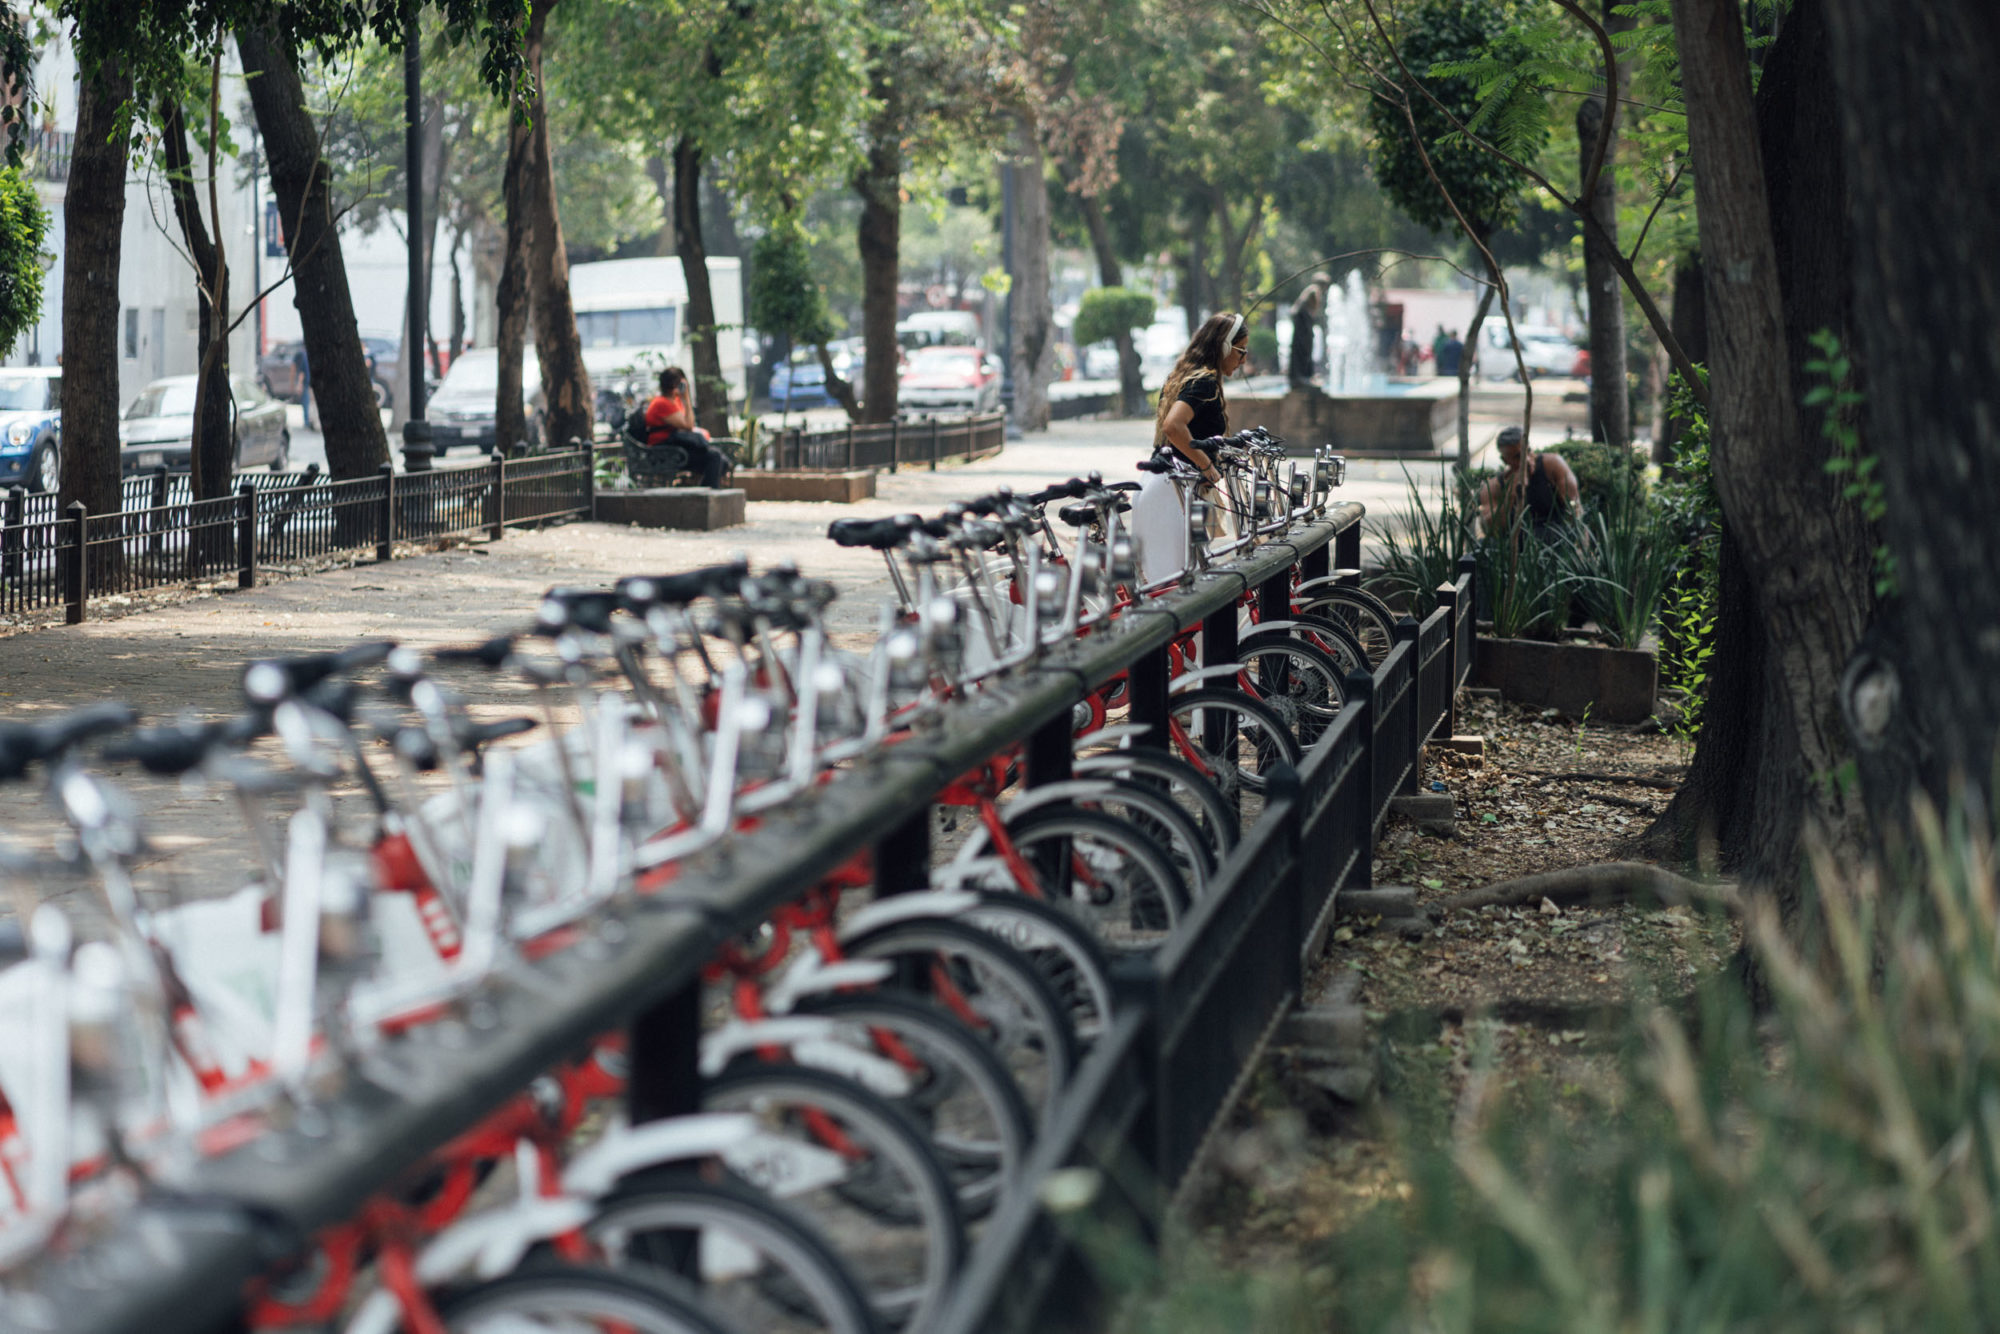 Mexico City Cycling Scene